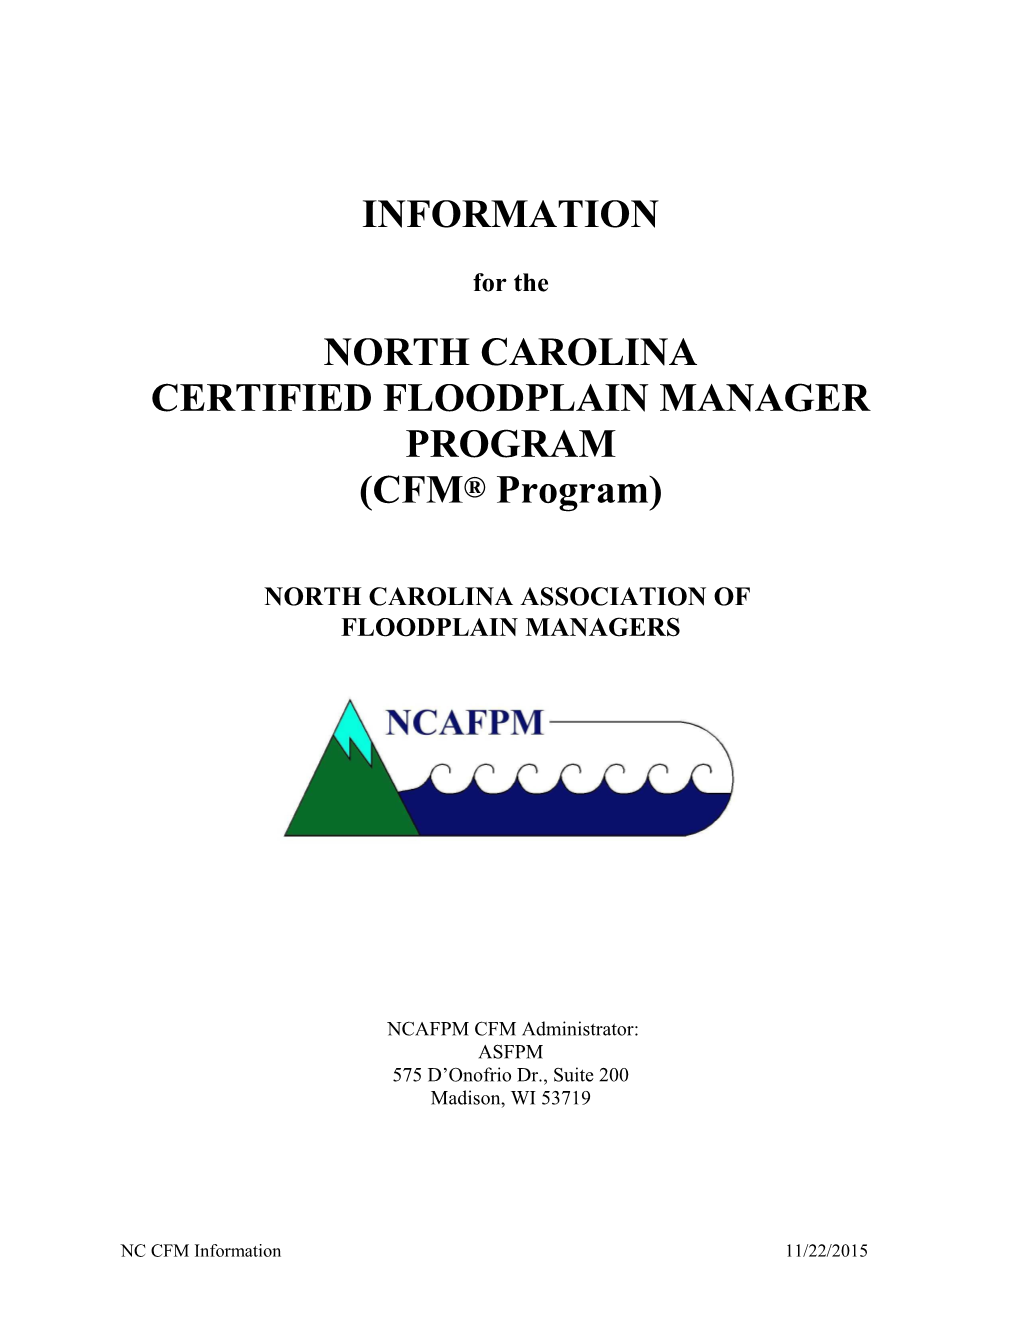 North Carolina Certified Floodplain Manager Program